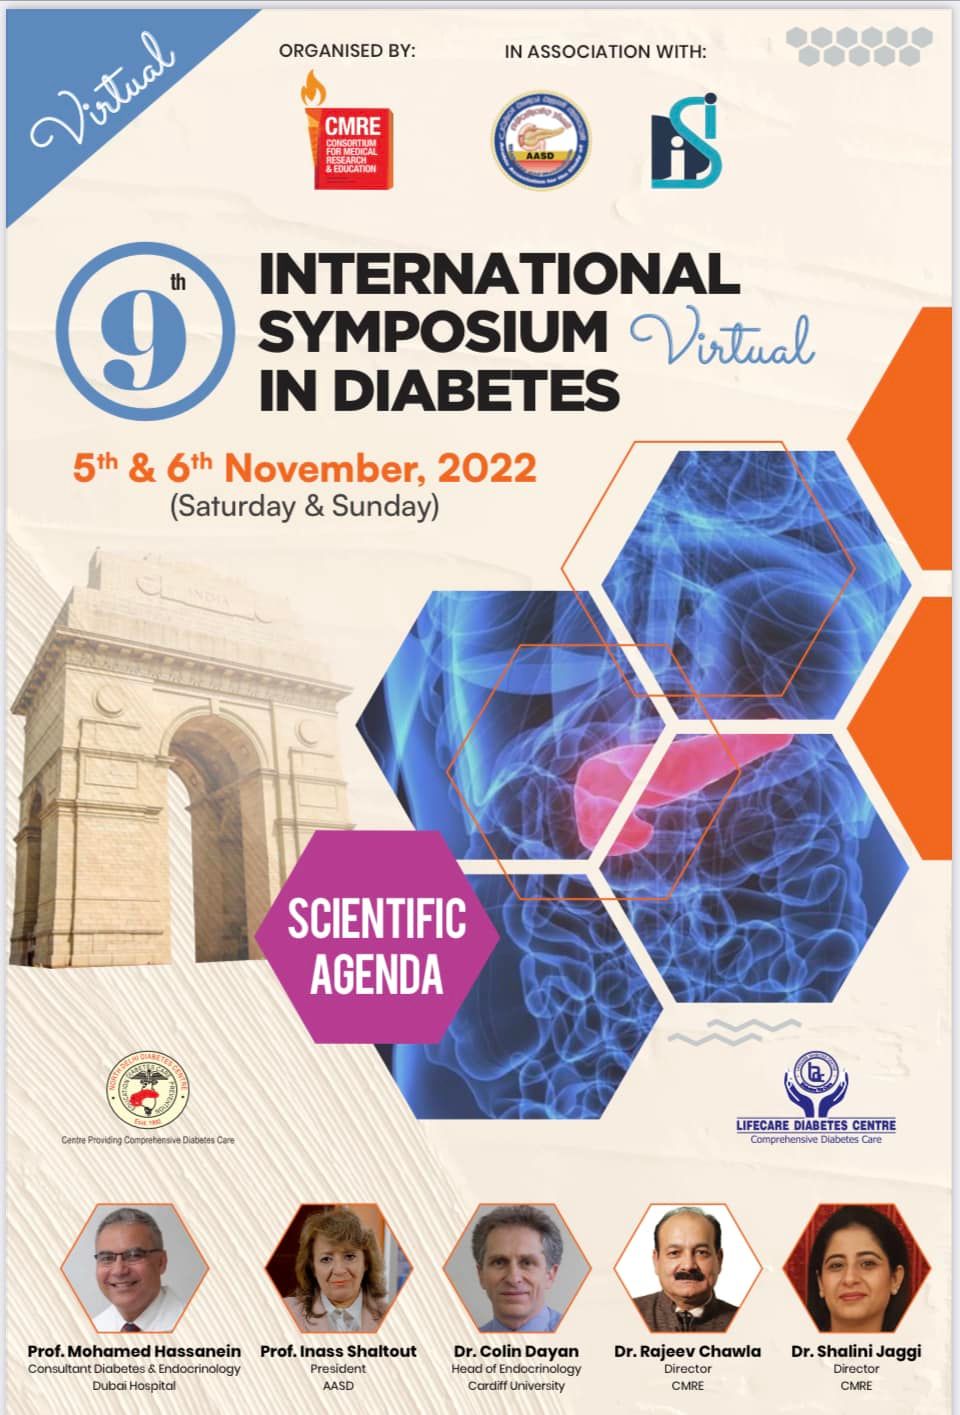 9th International Symposium in Diabetes